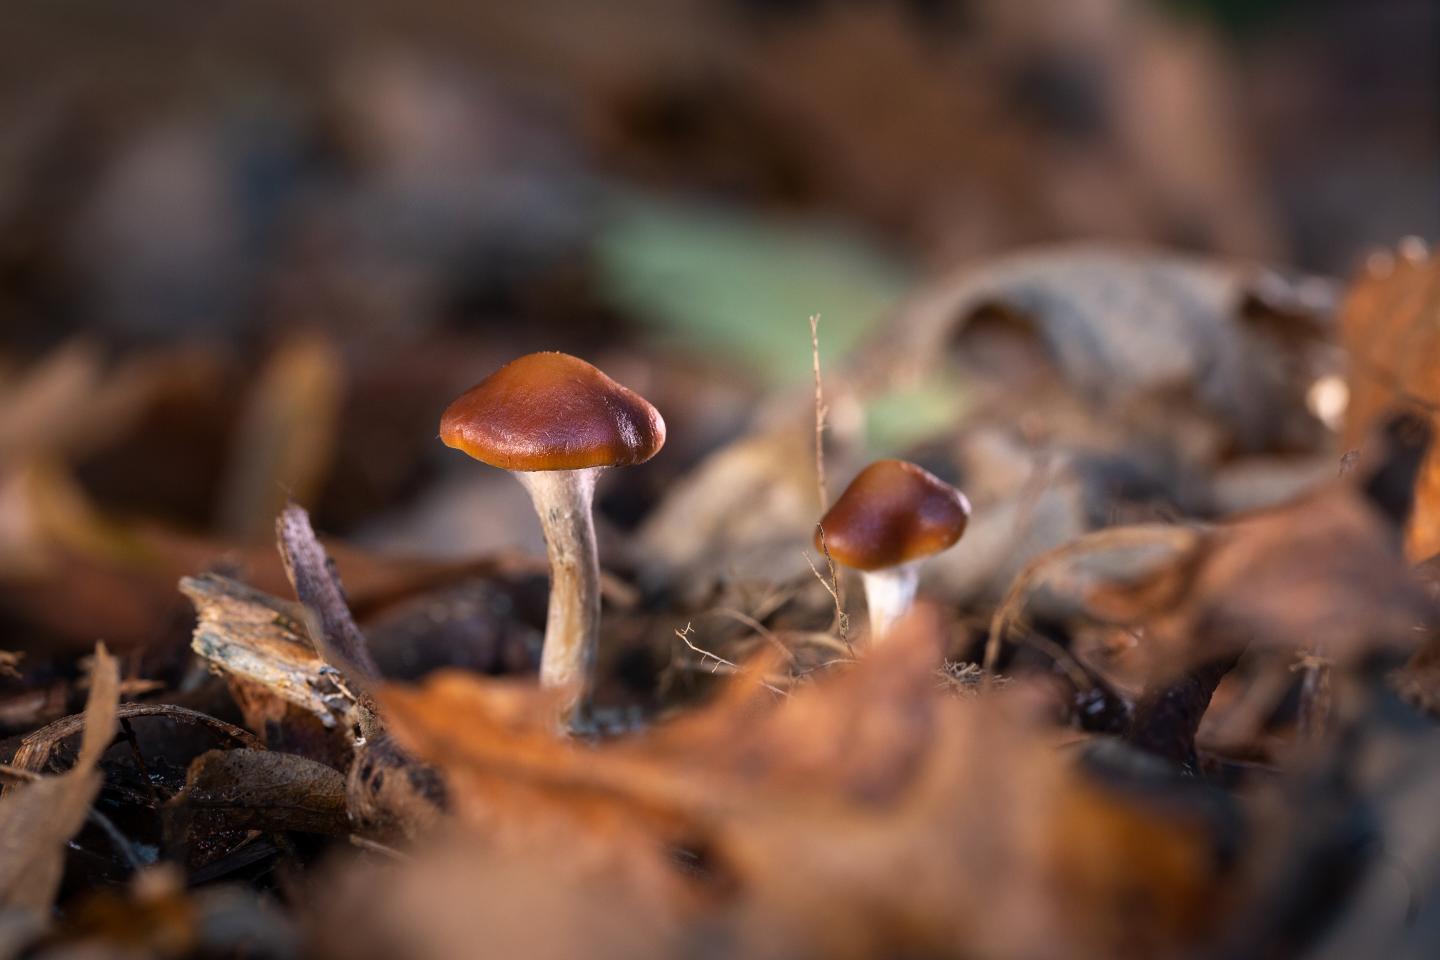 Psilocybe cyanescens Mushrooms